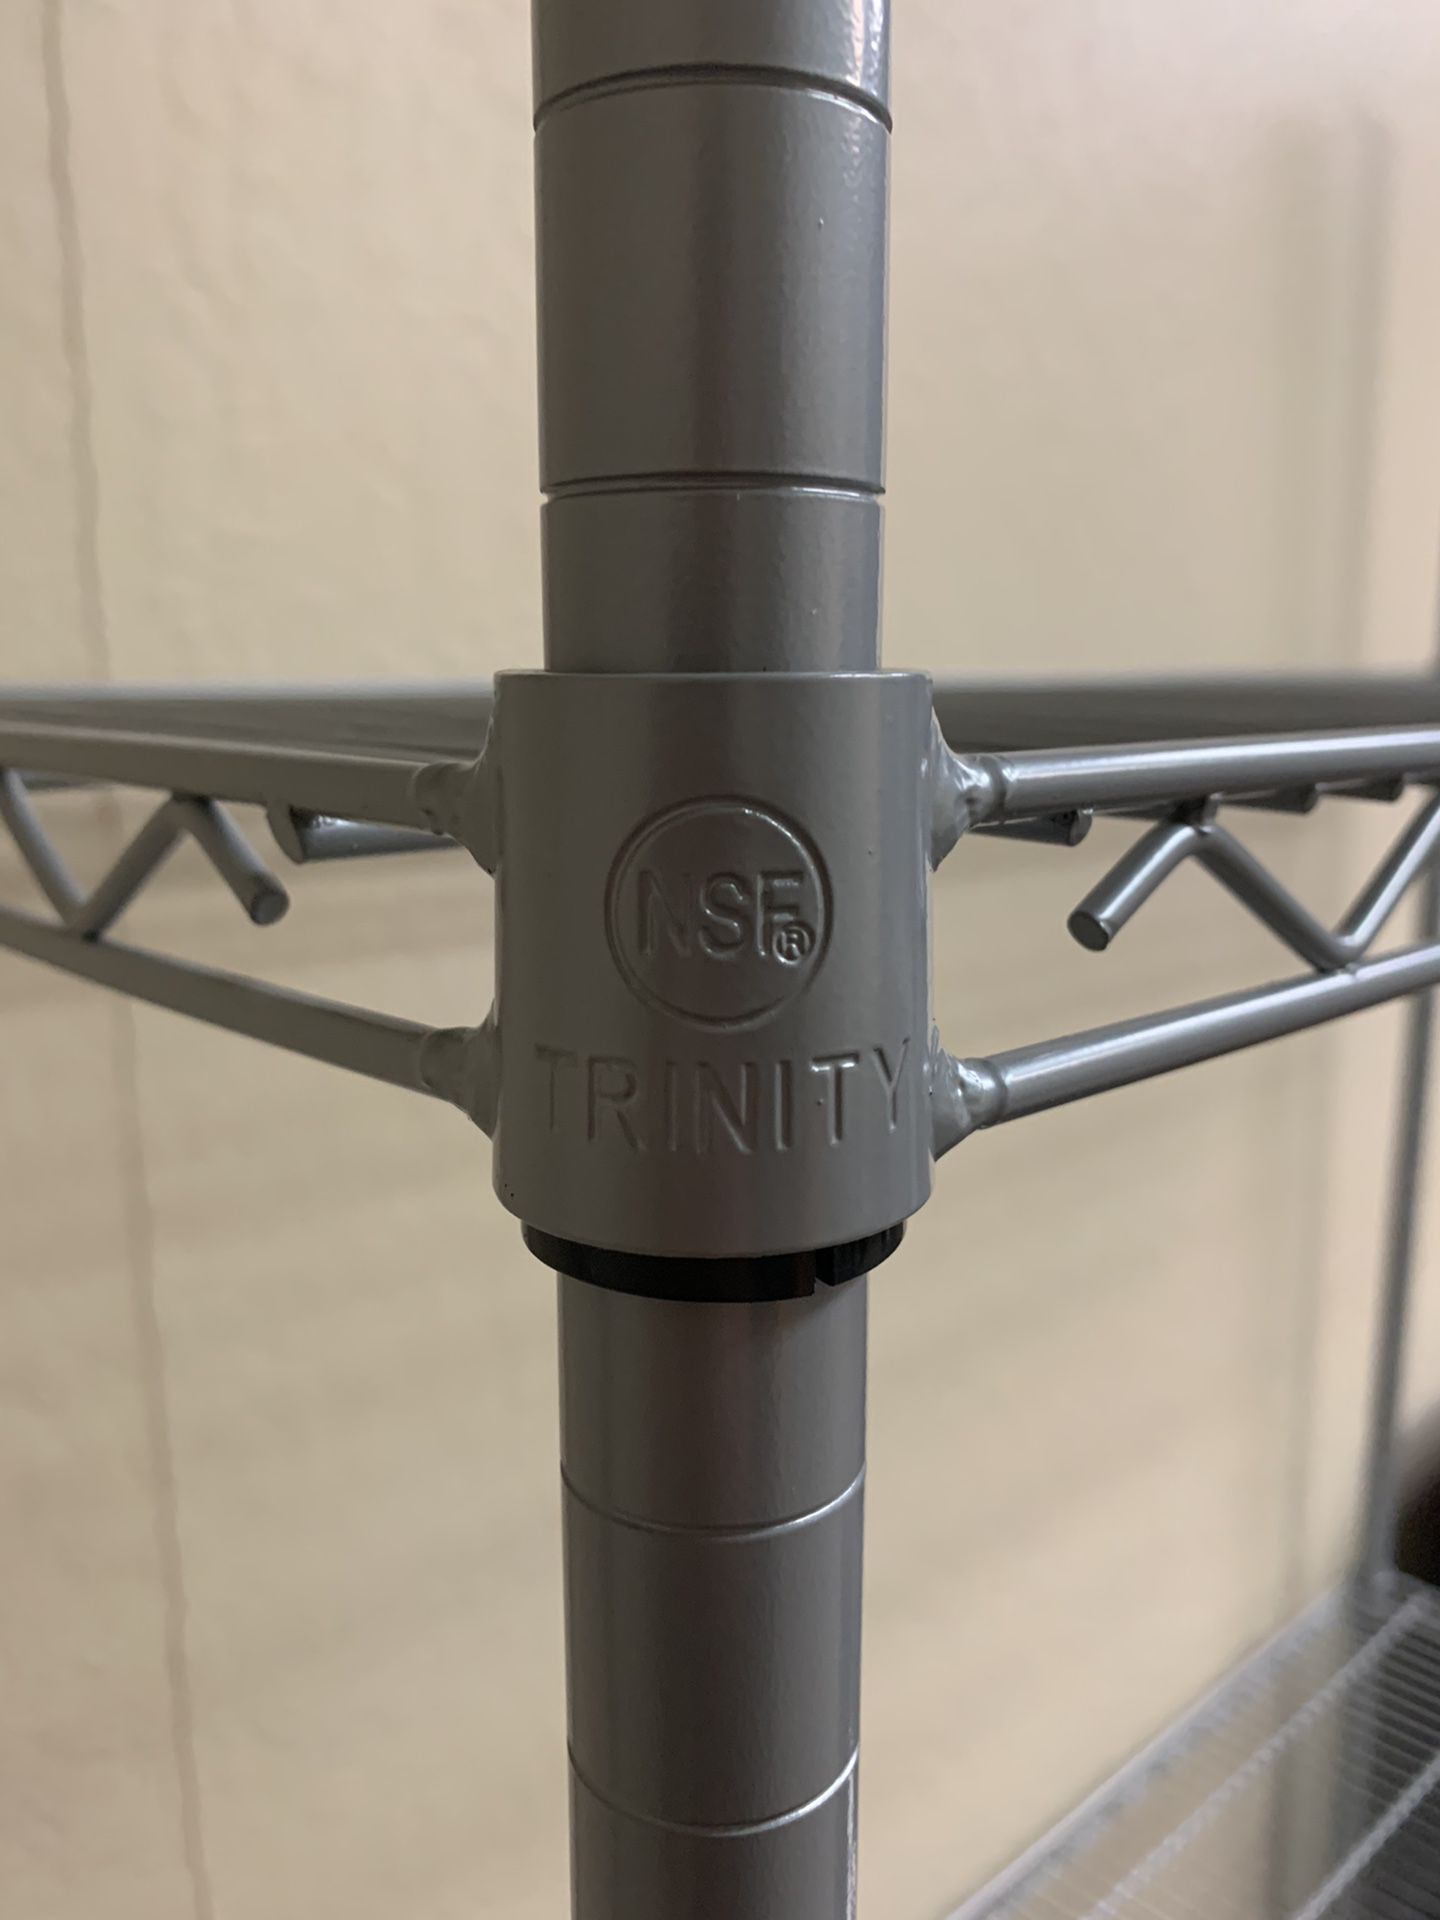 (Set Of 3) NSF Trinity Metal Shelf Racks